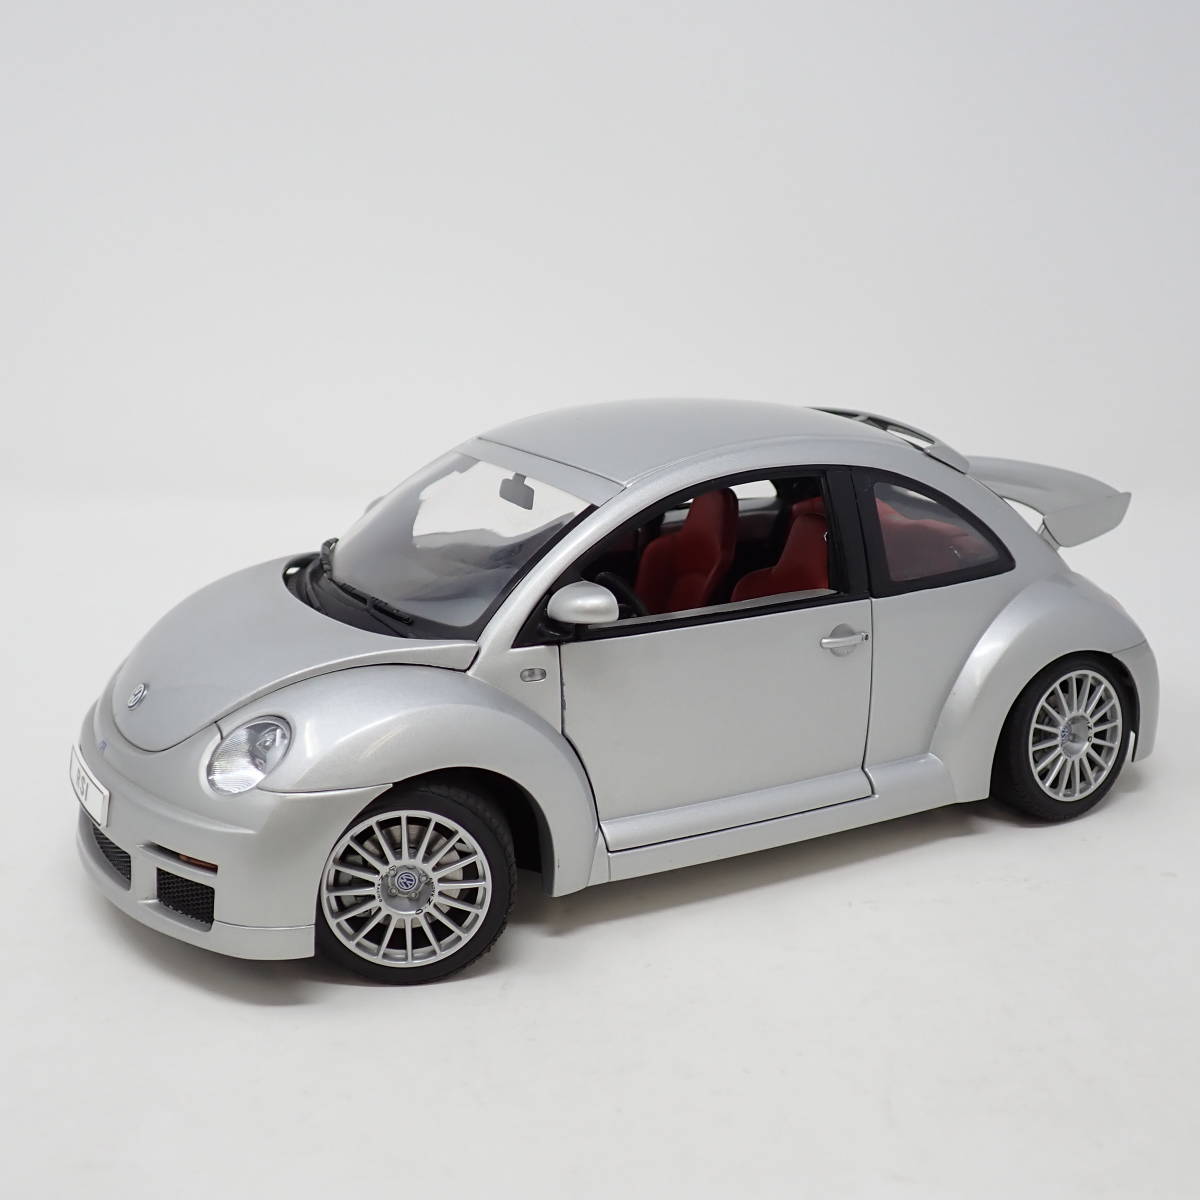 AUTOart オートアート Volkswagen New Beetle RSI フォルクスワーゲン